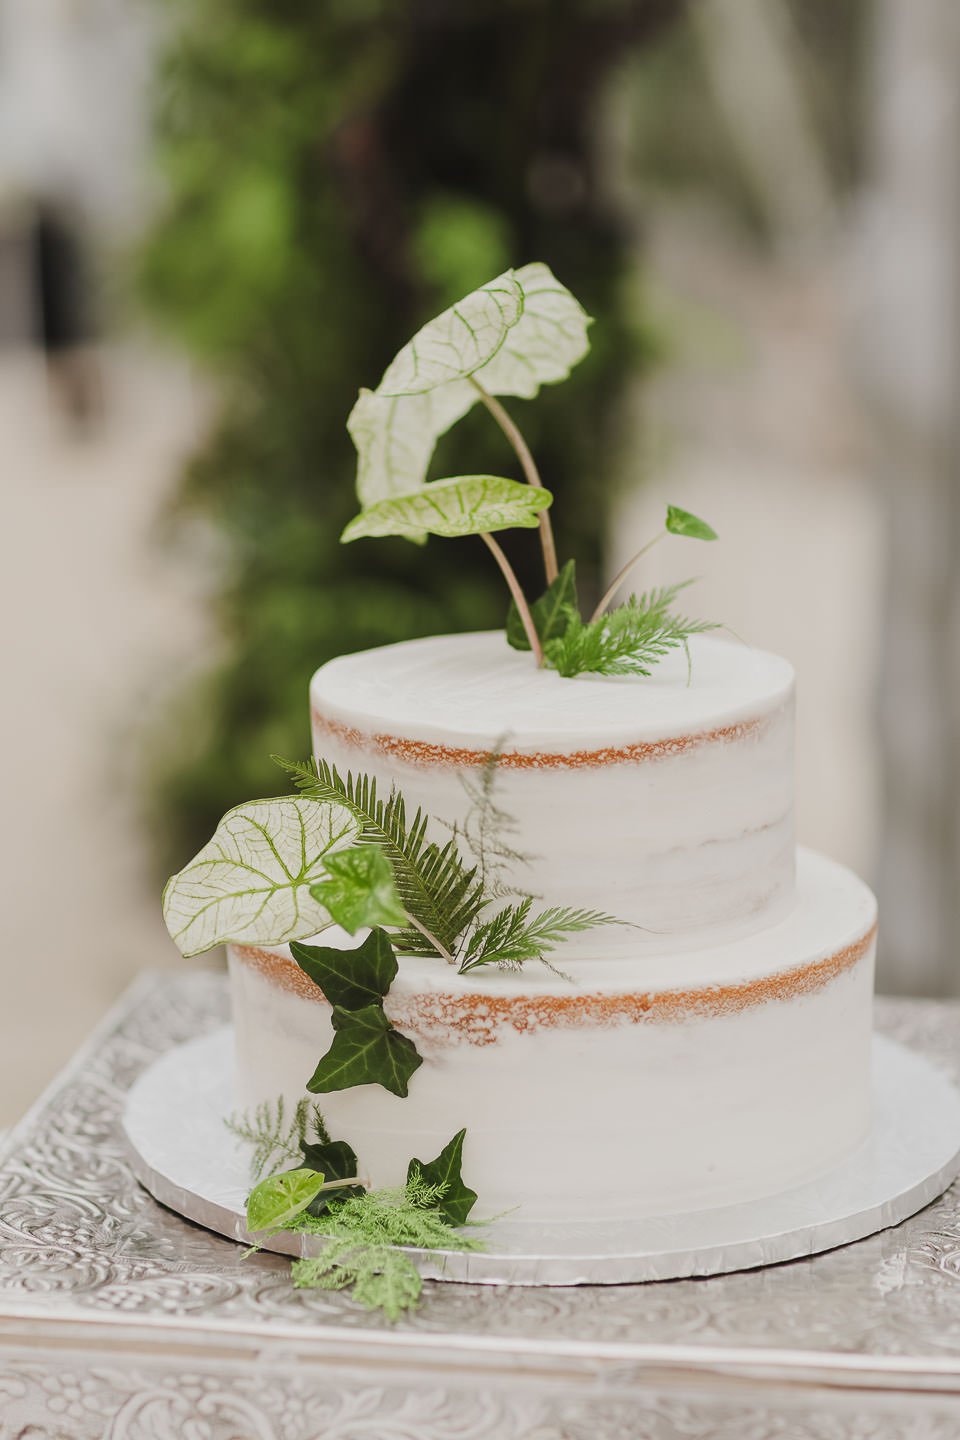 White wedding cake with simple greenery